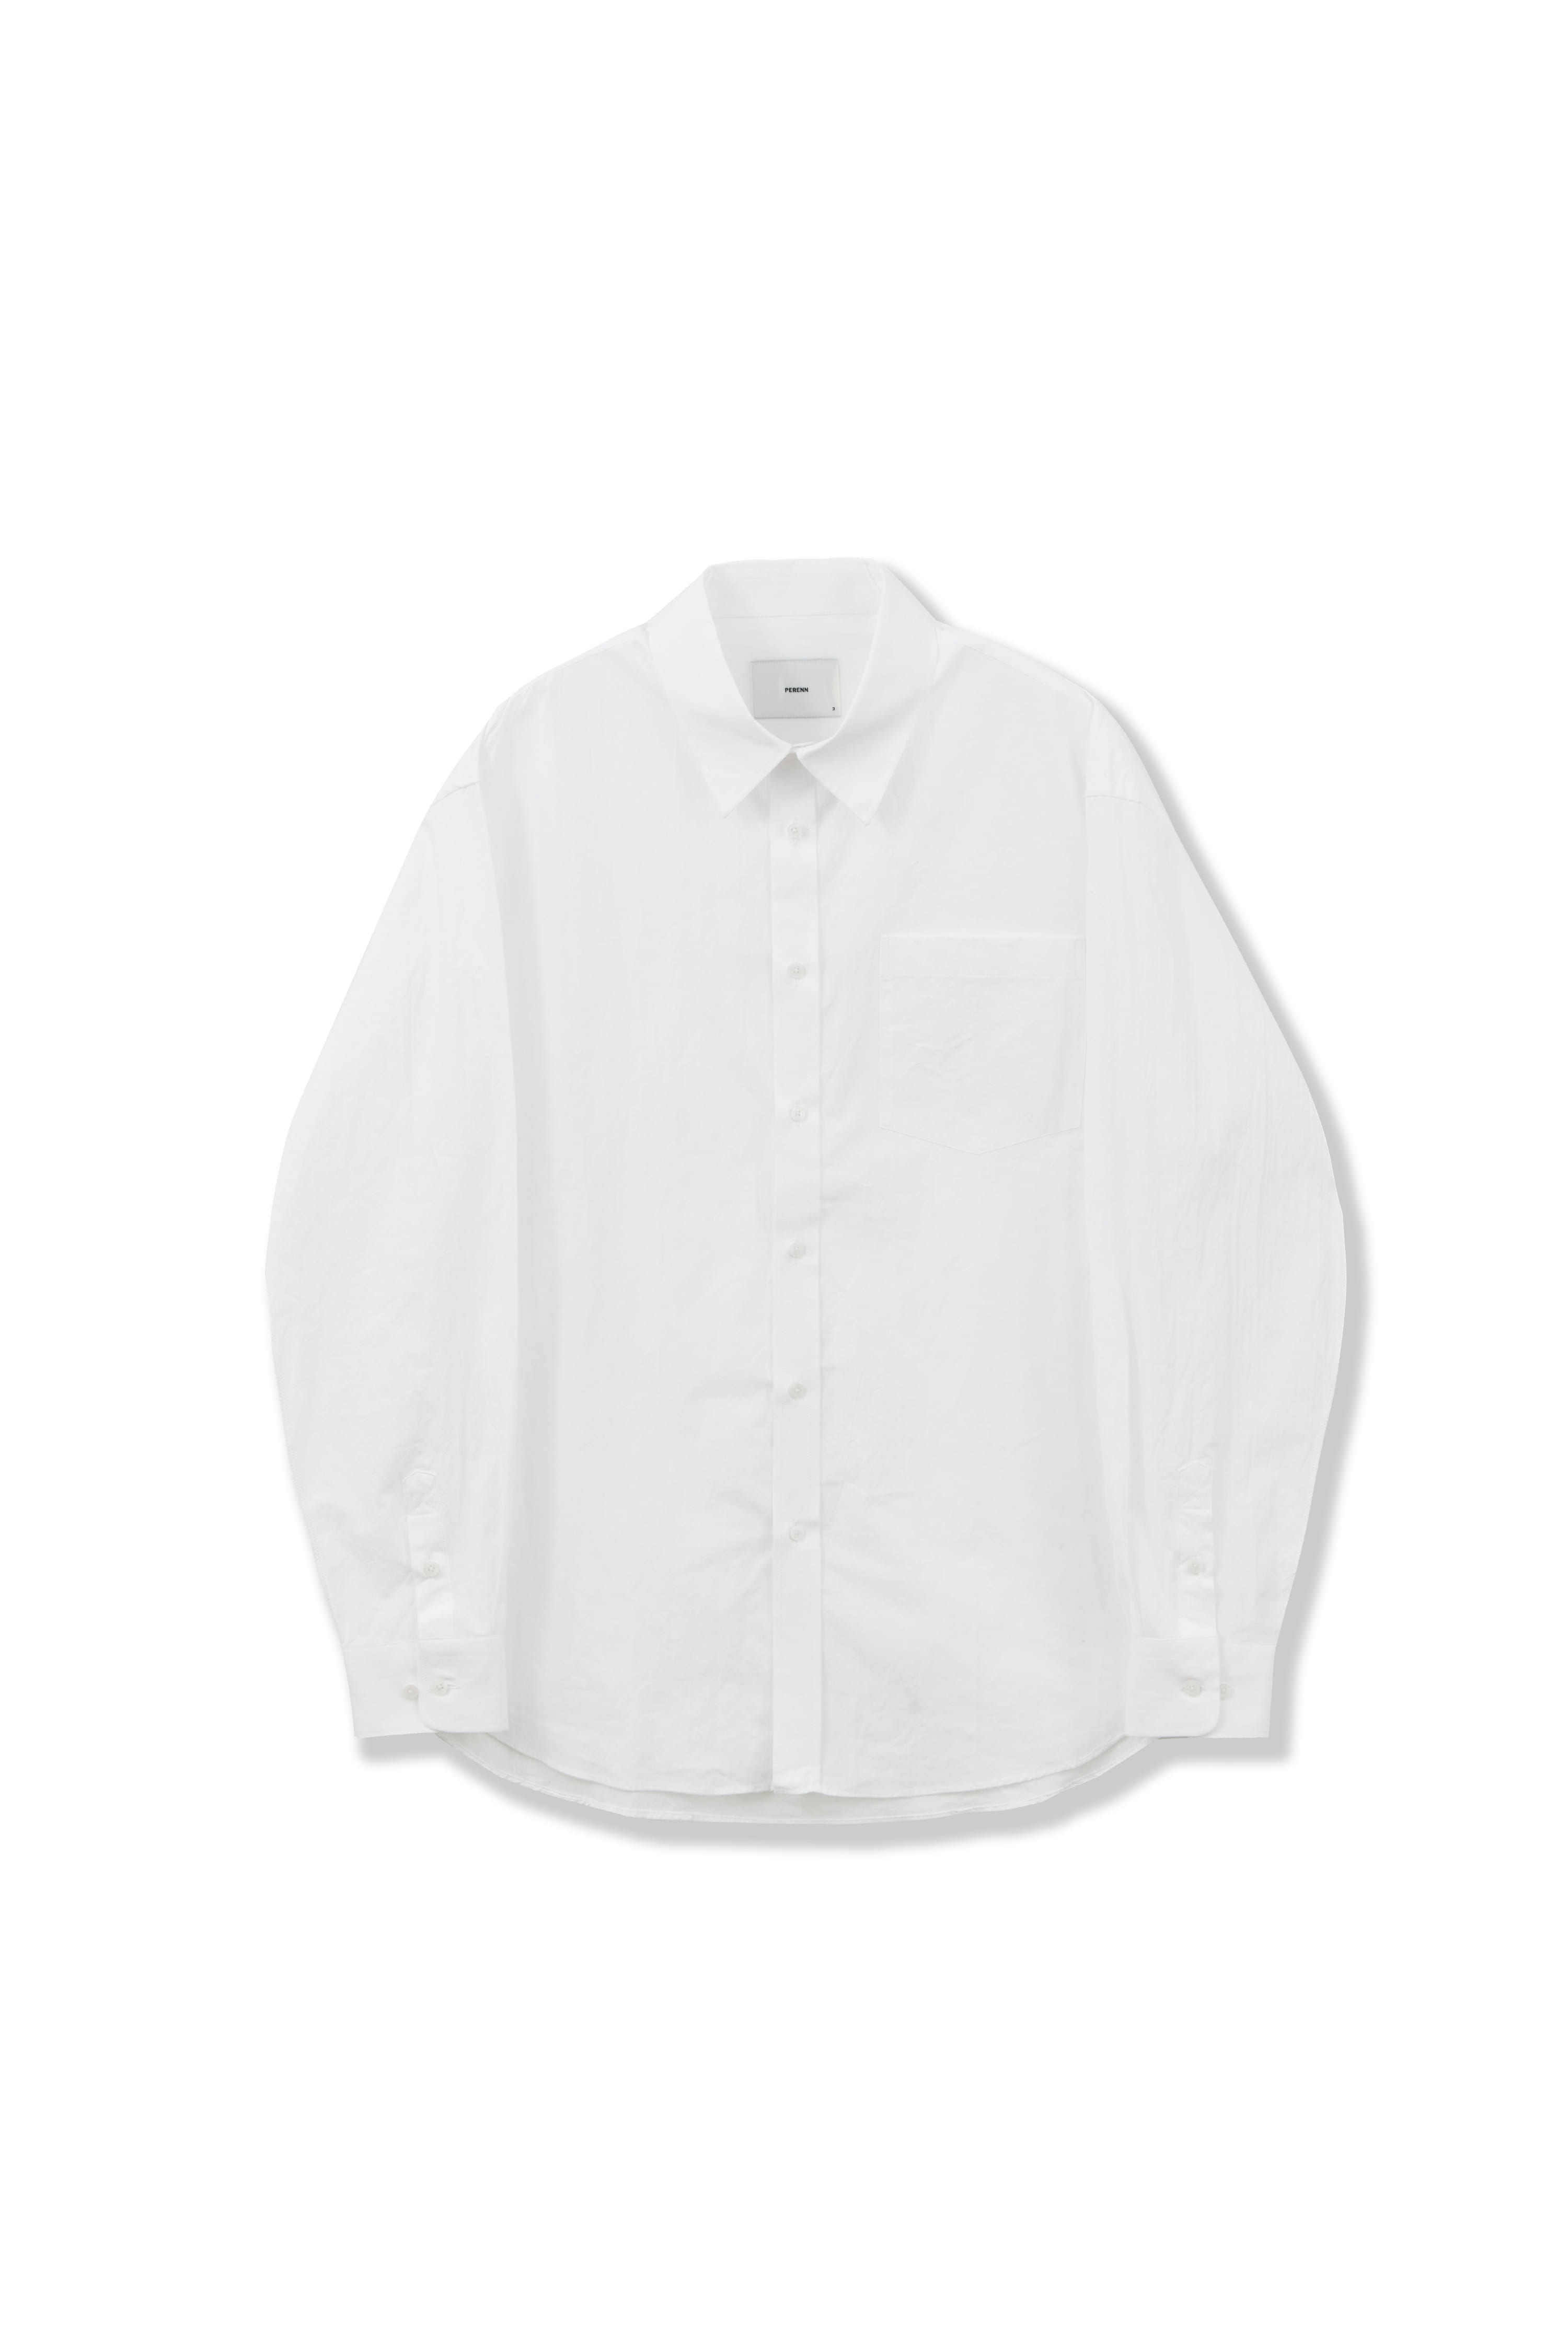 PERENN퍼렌 relaxed shirts_white